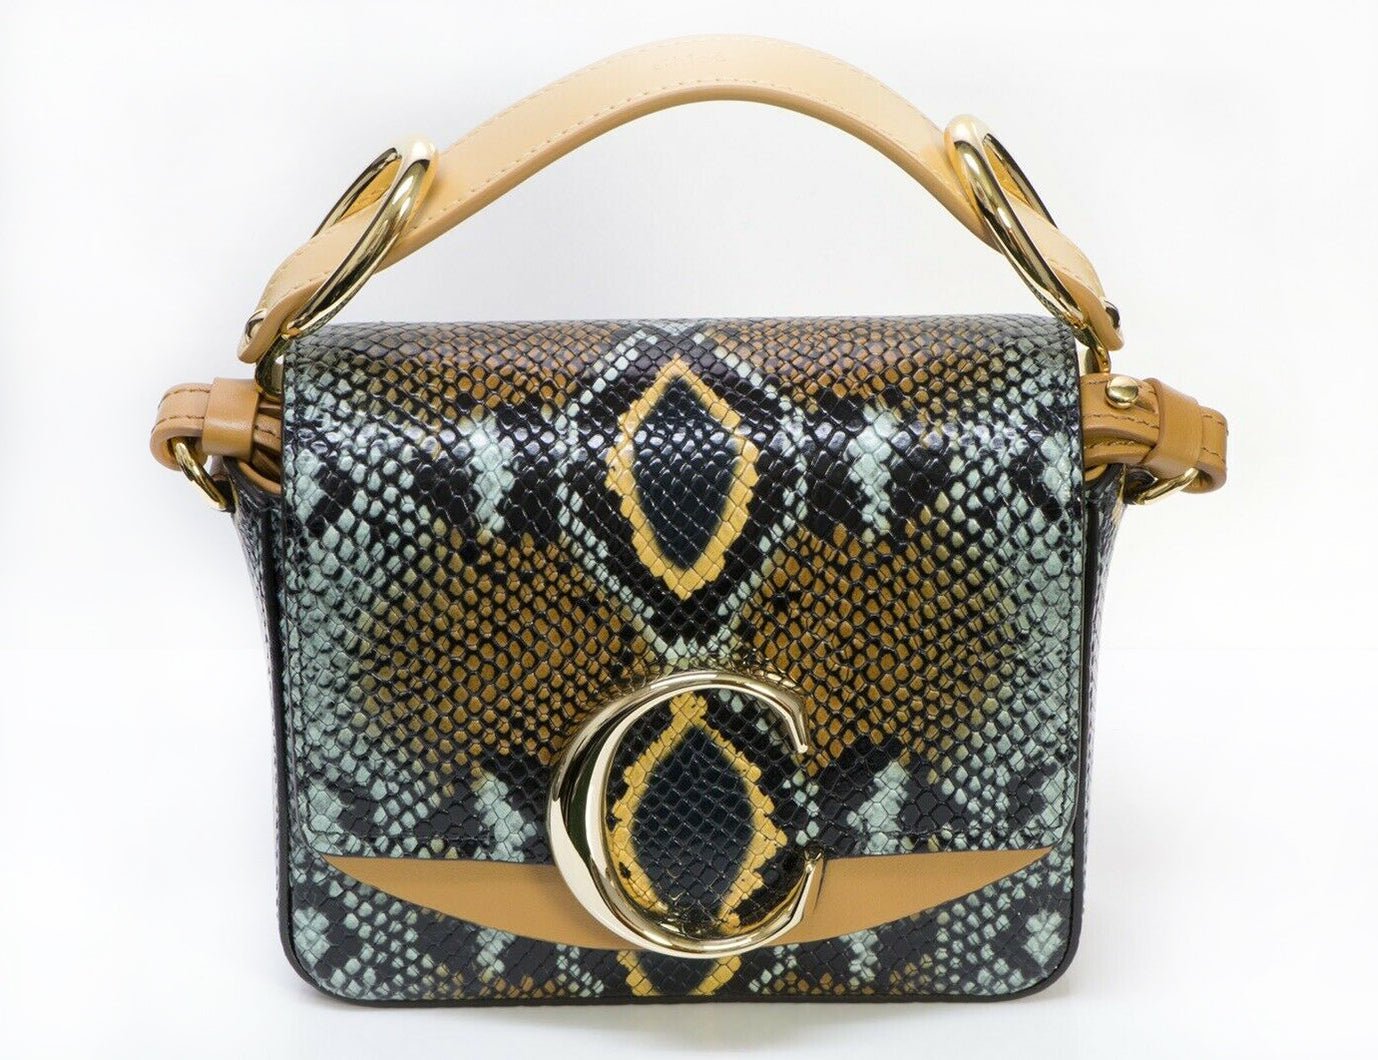 CHLOE C Python Snakeskin Print Embossed Leather Crossbody Mini Bag